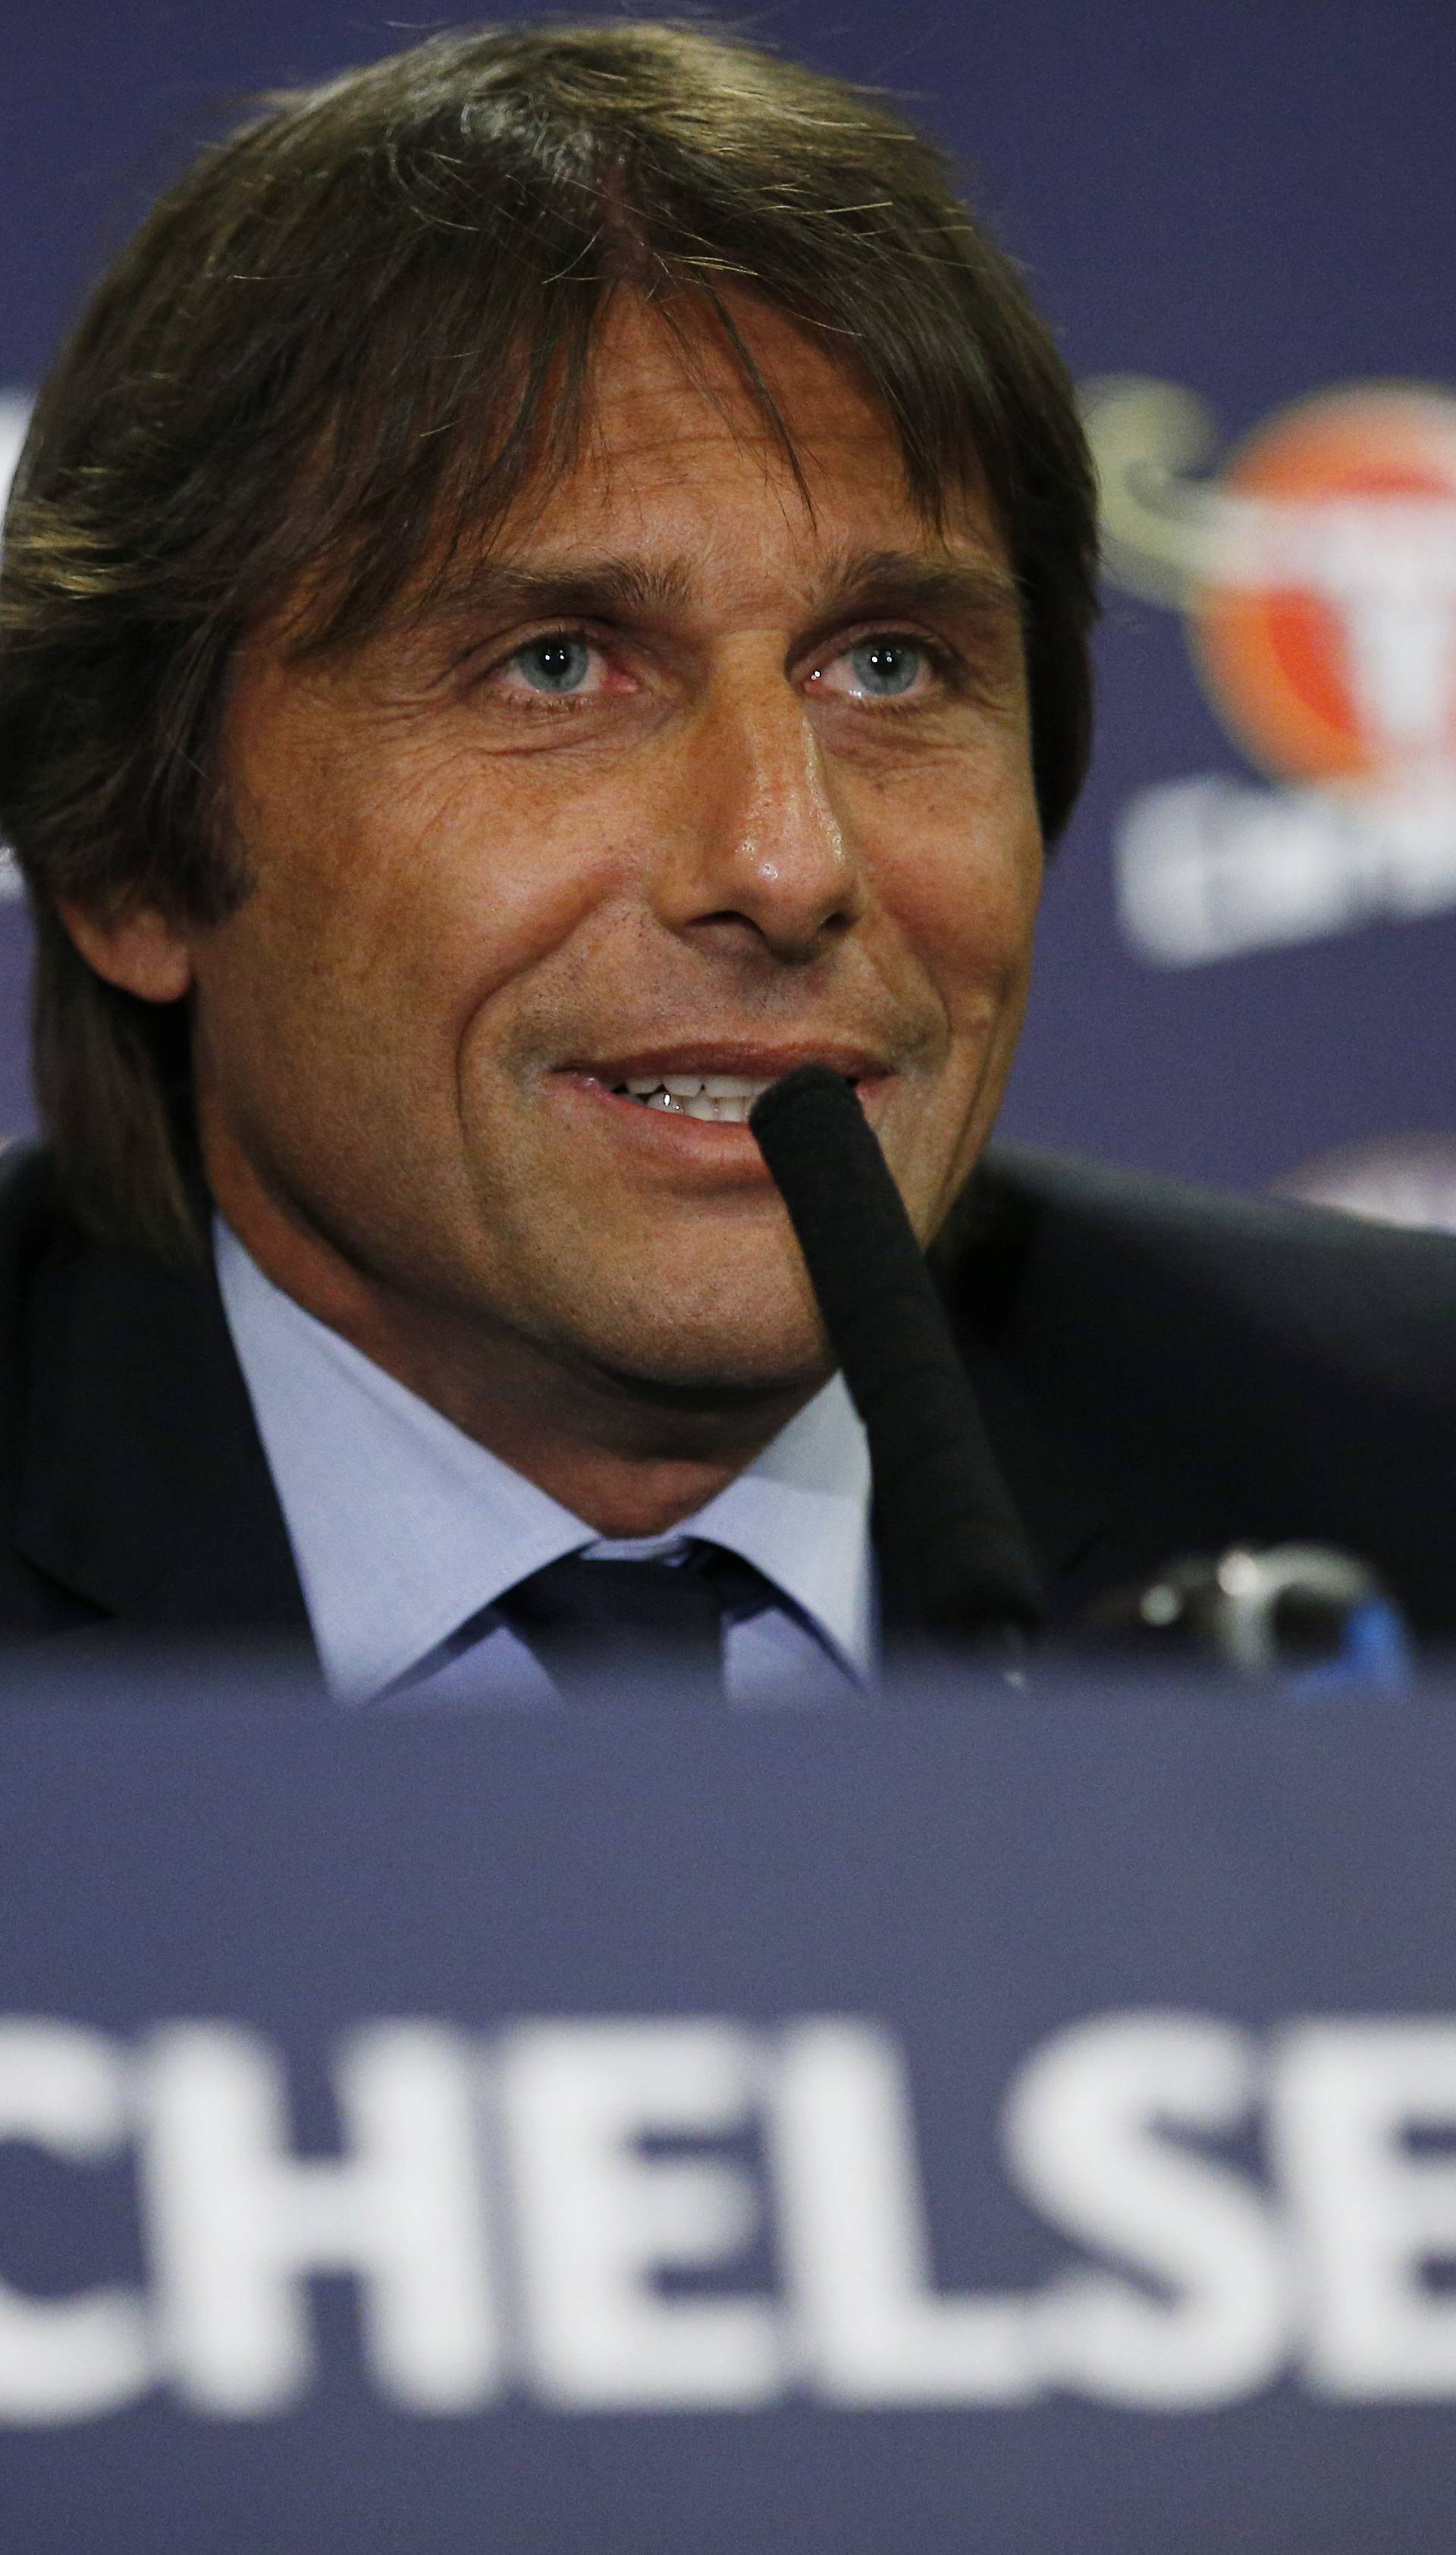 Chelsea - Antonio Conte Press Conference